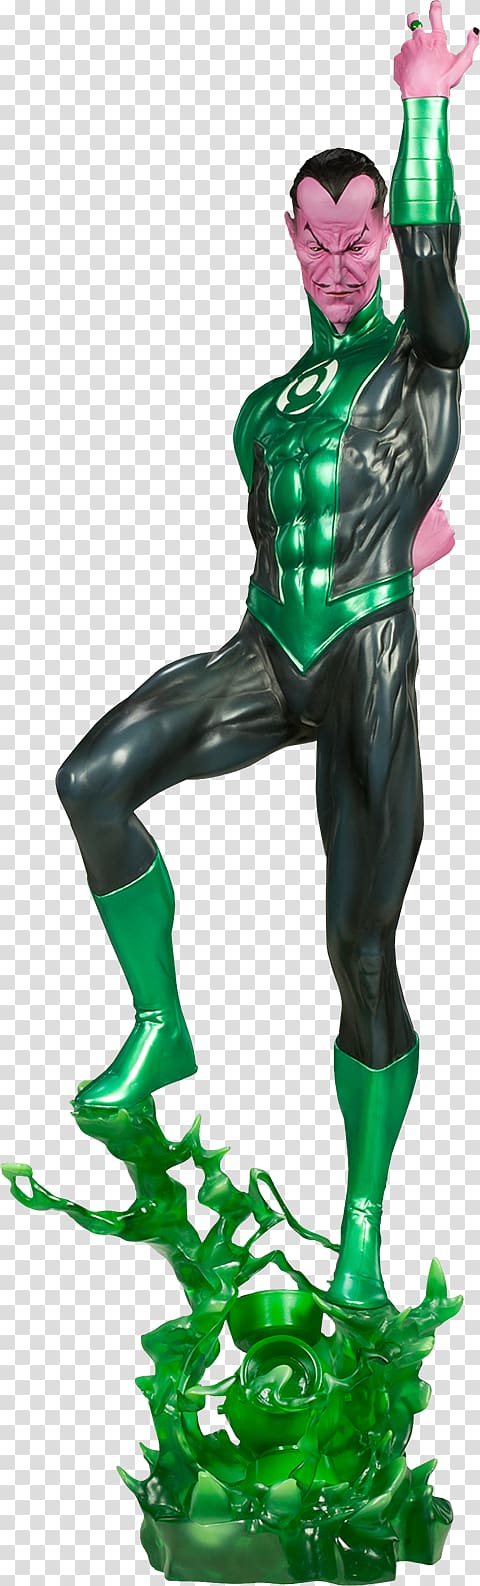 Sinestro Corps Green Lantern Corps Superhero, dc comics transparent background PNG clipart